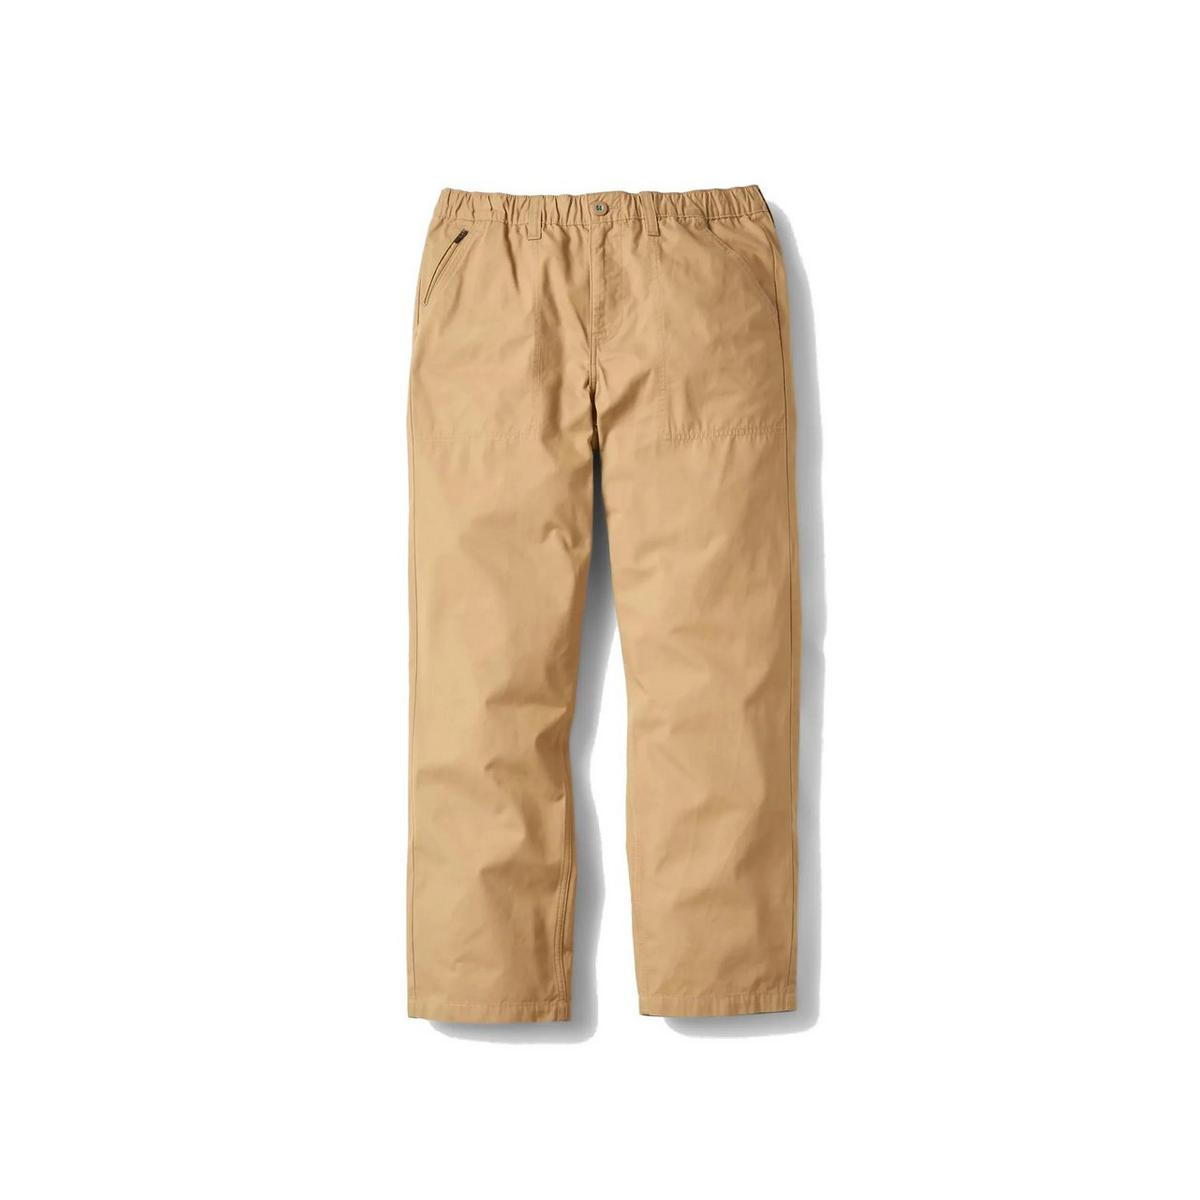 Passenger Men's Chance Organic Cotton Trousers - Brown